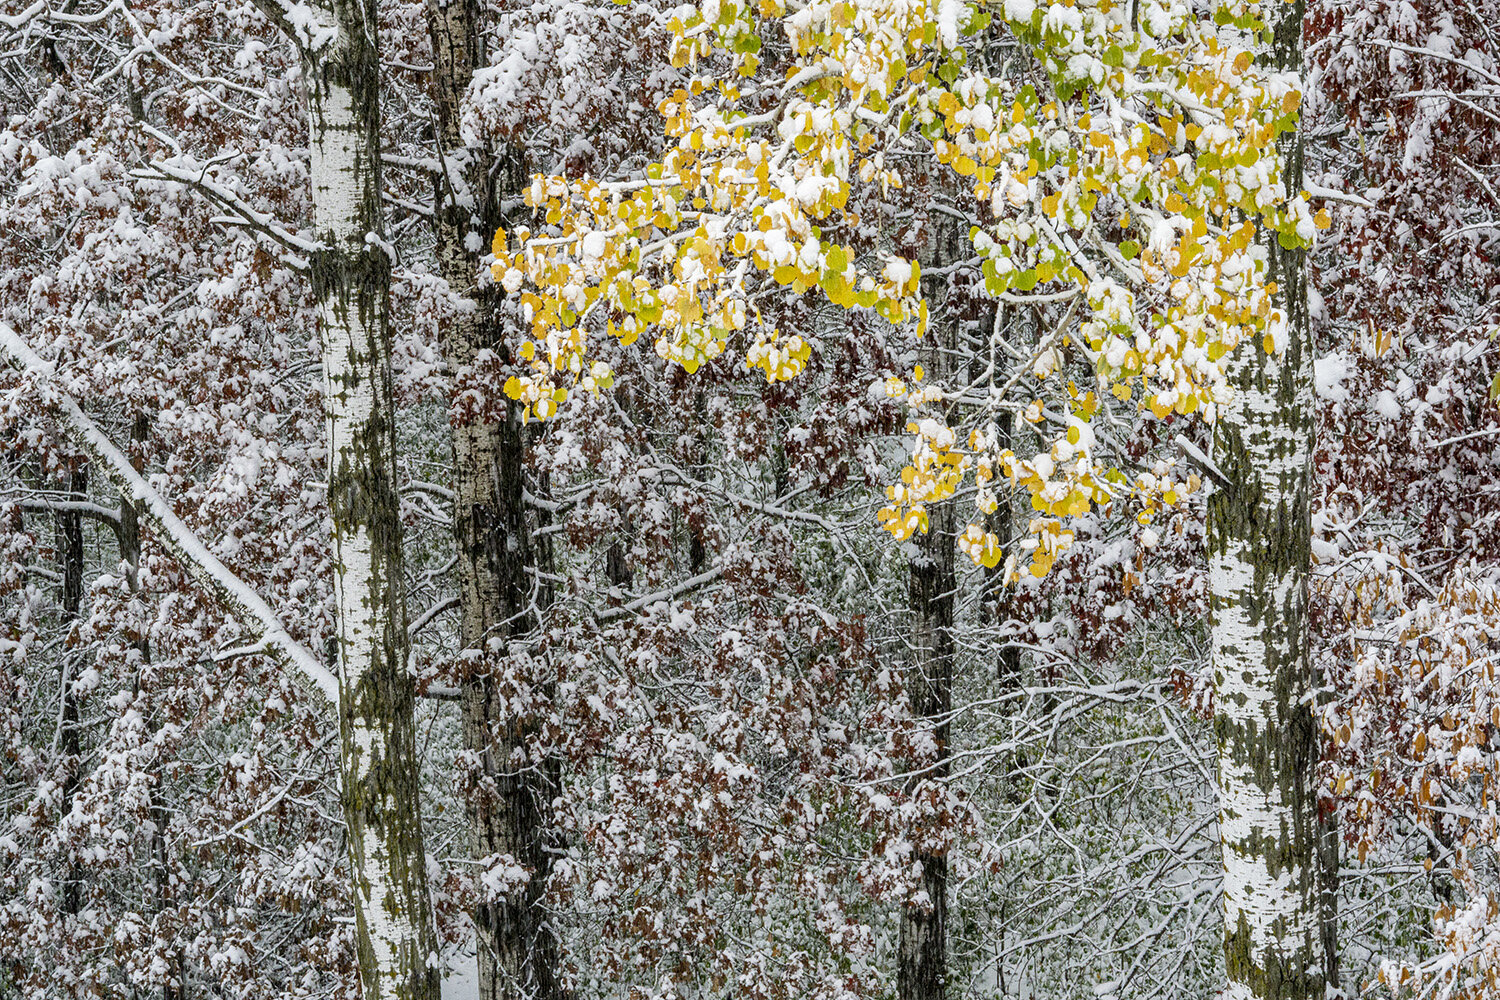 Snow_trees.jpg